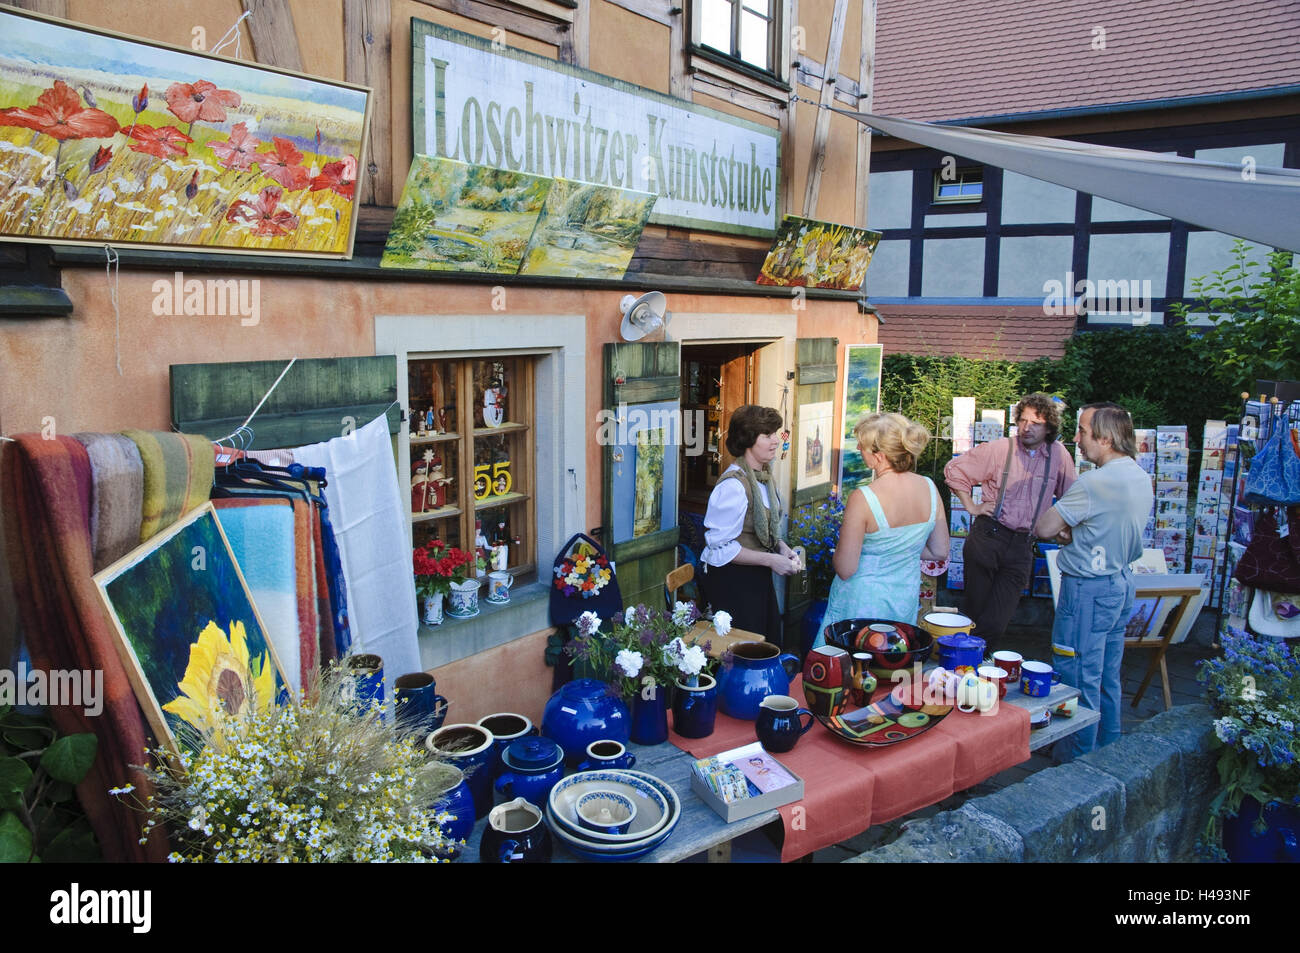 Handicraft shop, Elbhangfest in Loschwitz, Dresden, Saxony, Germany, Stock Photo